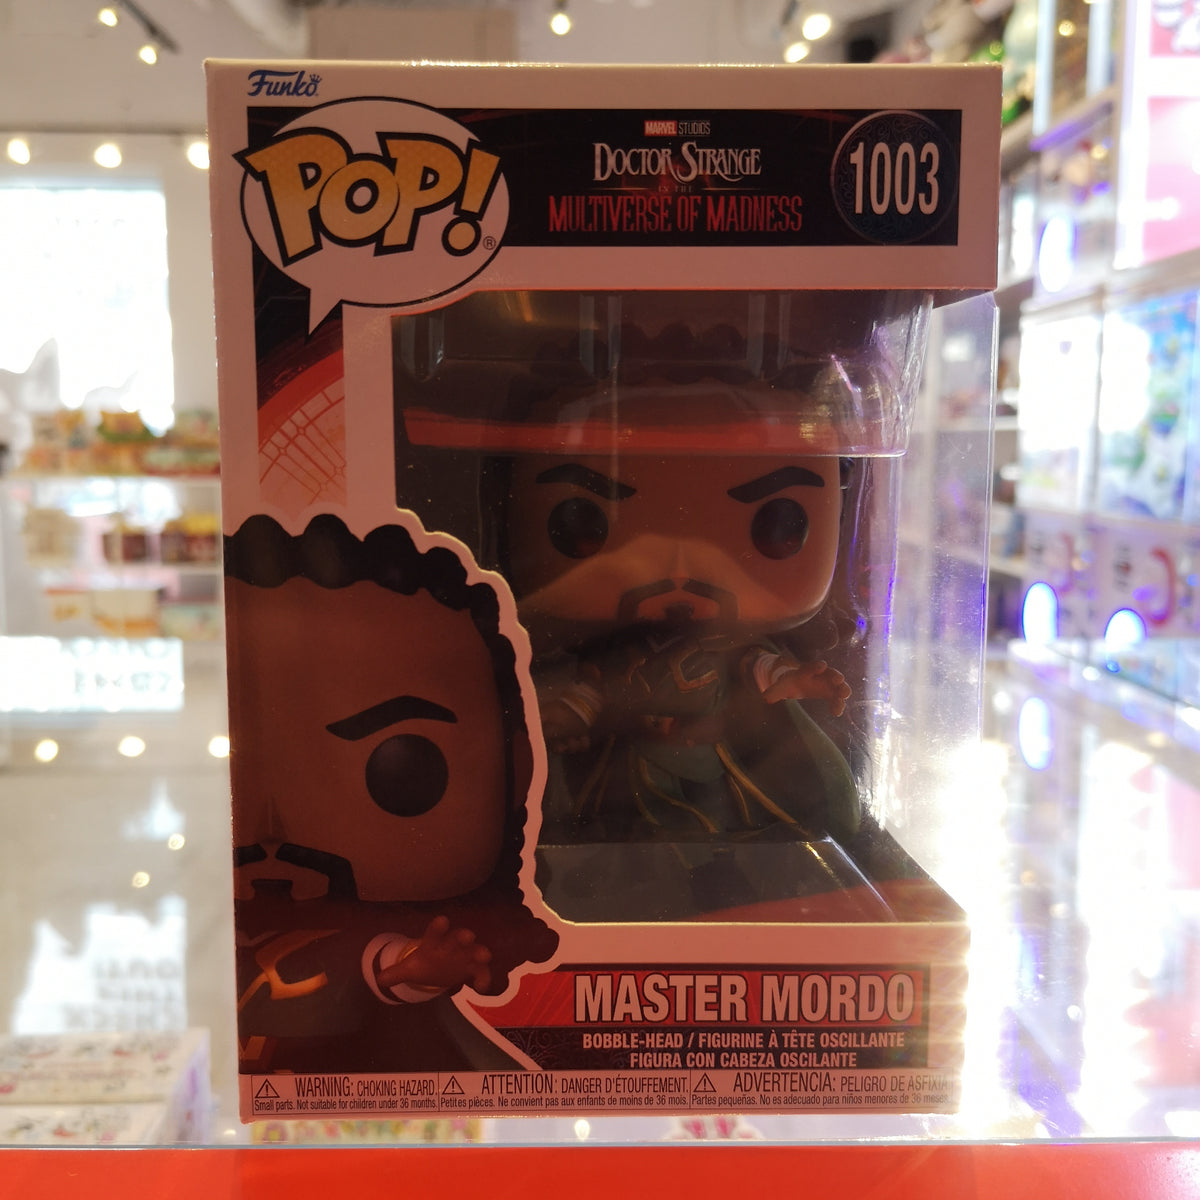 Master Mordo - Doctor Strange in the Multiverse of Madness Funko POP! by Funko